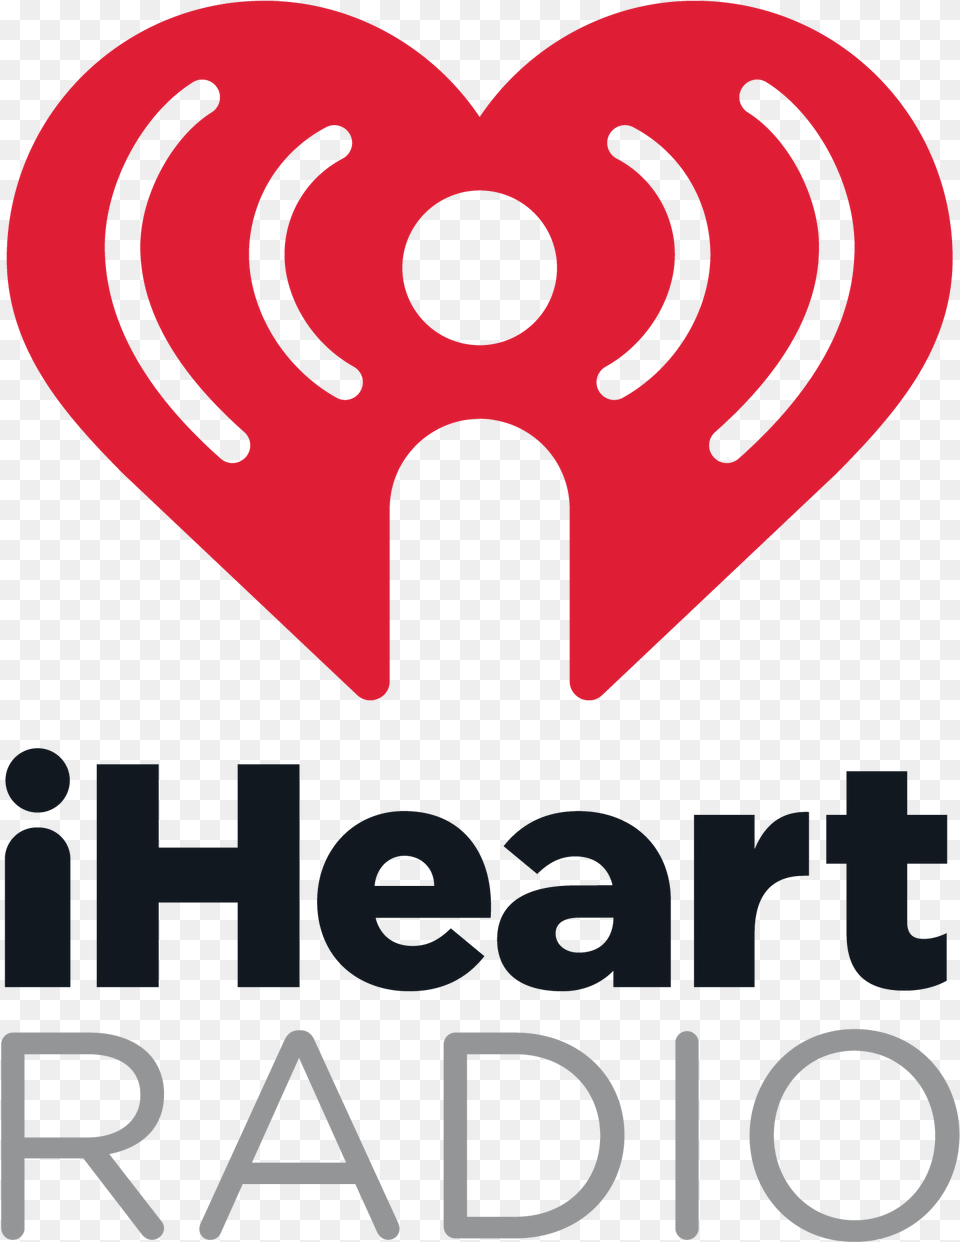 Post Malone Added To 2017 Iheartradio Canada Jingle Ima Streaming Radio Speaker Portable Wireless Speaker, Logo Free Png Download